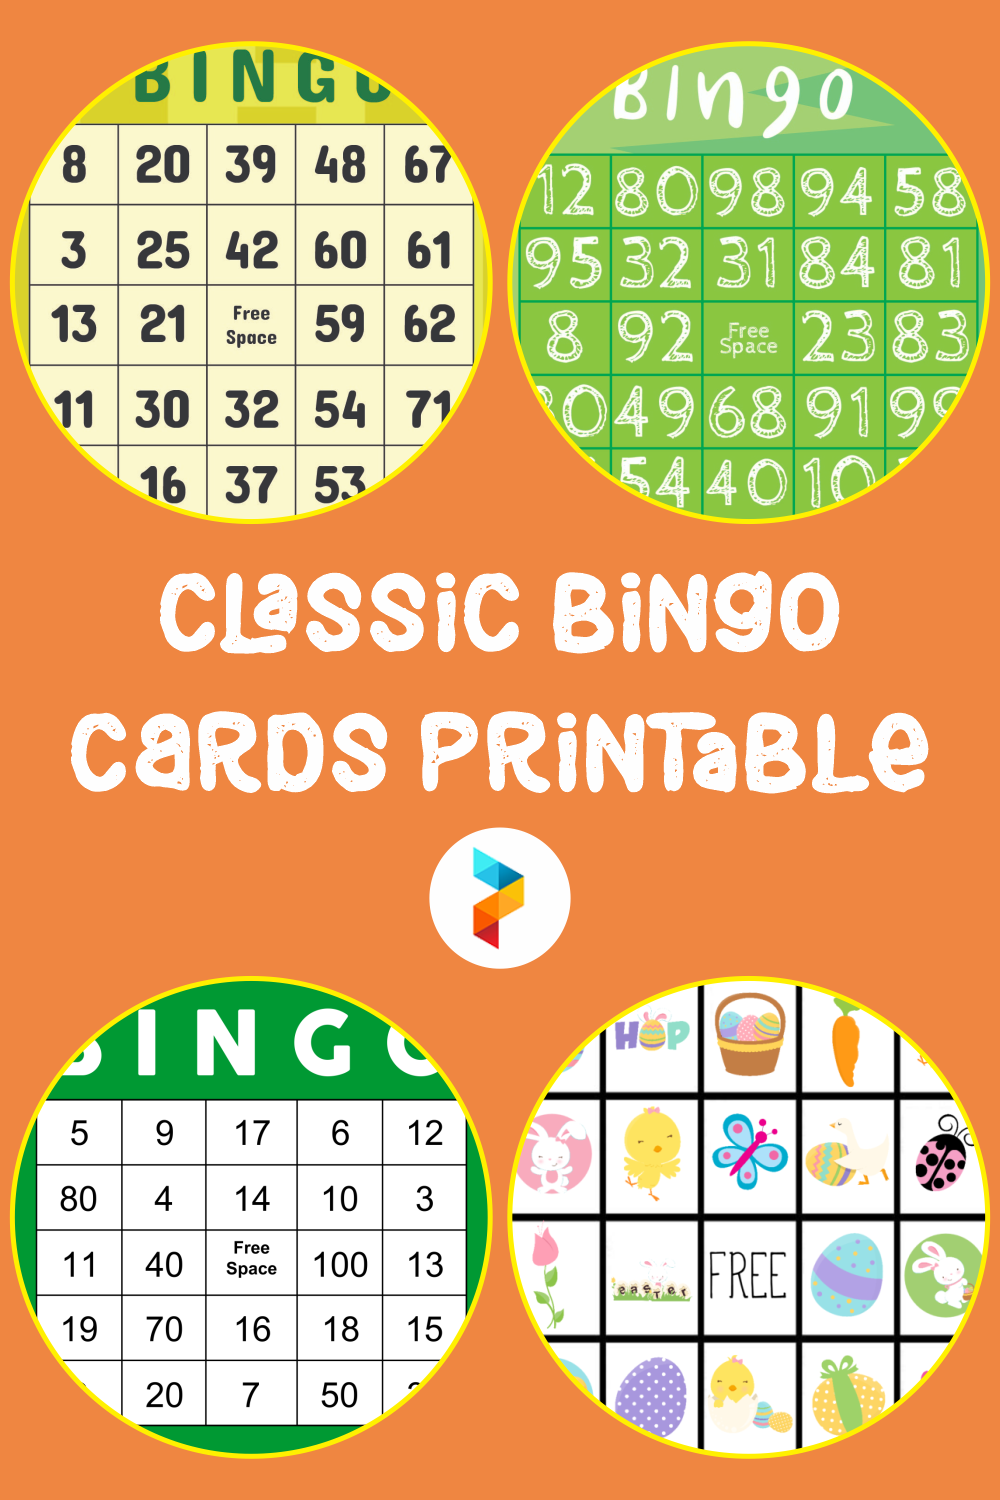 Classic Bingo Cards Printable